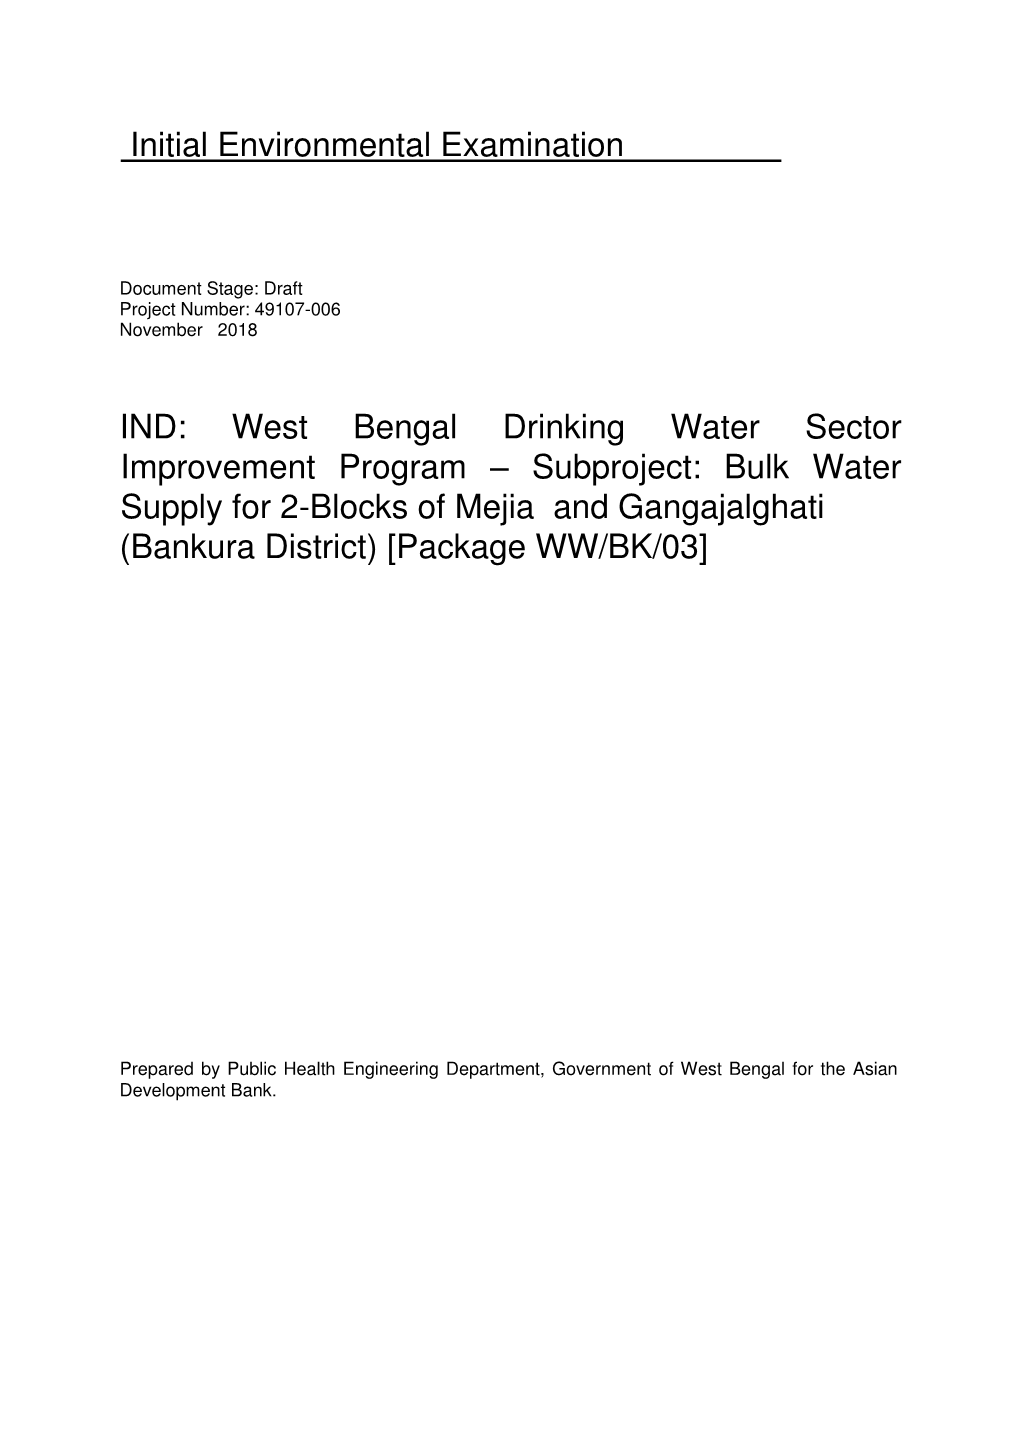 West Bengal Drinking Water Sector Improvement Program – Subproject: Bulk Water Supply for 2-Blocks of Mejia and Gangajalghati (Bankura District) [Package WW/BK/03]